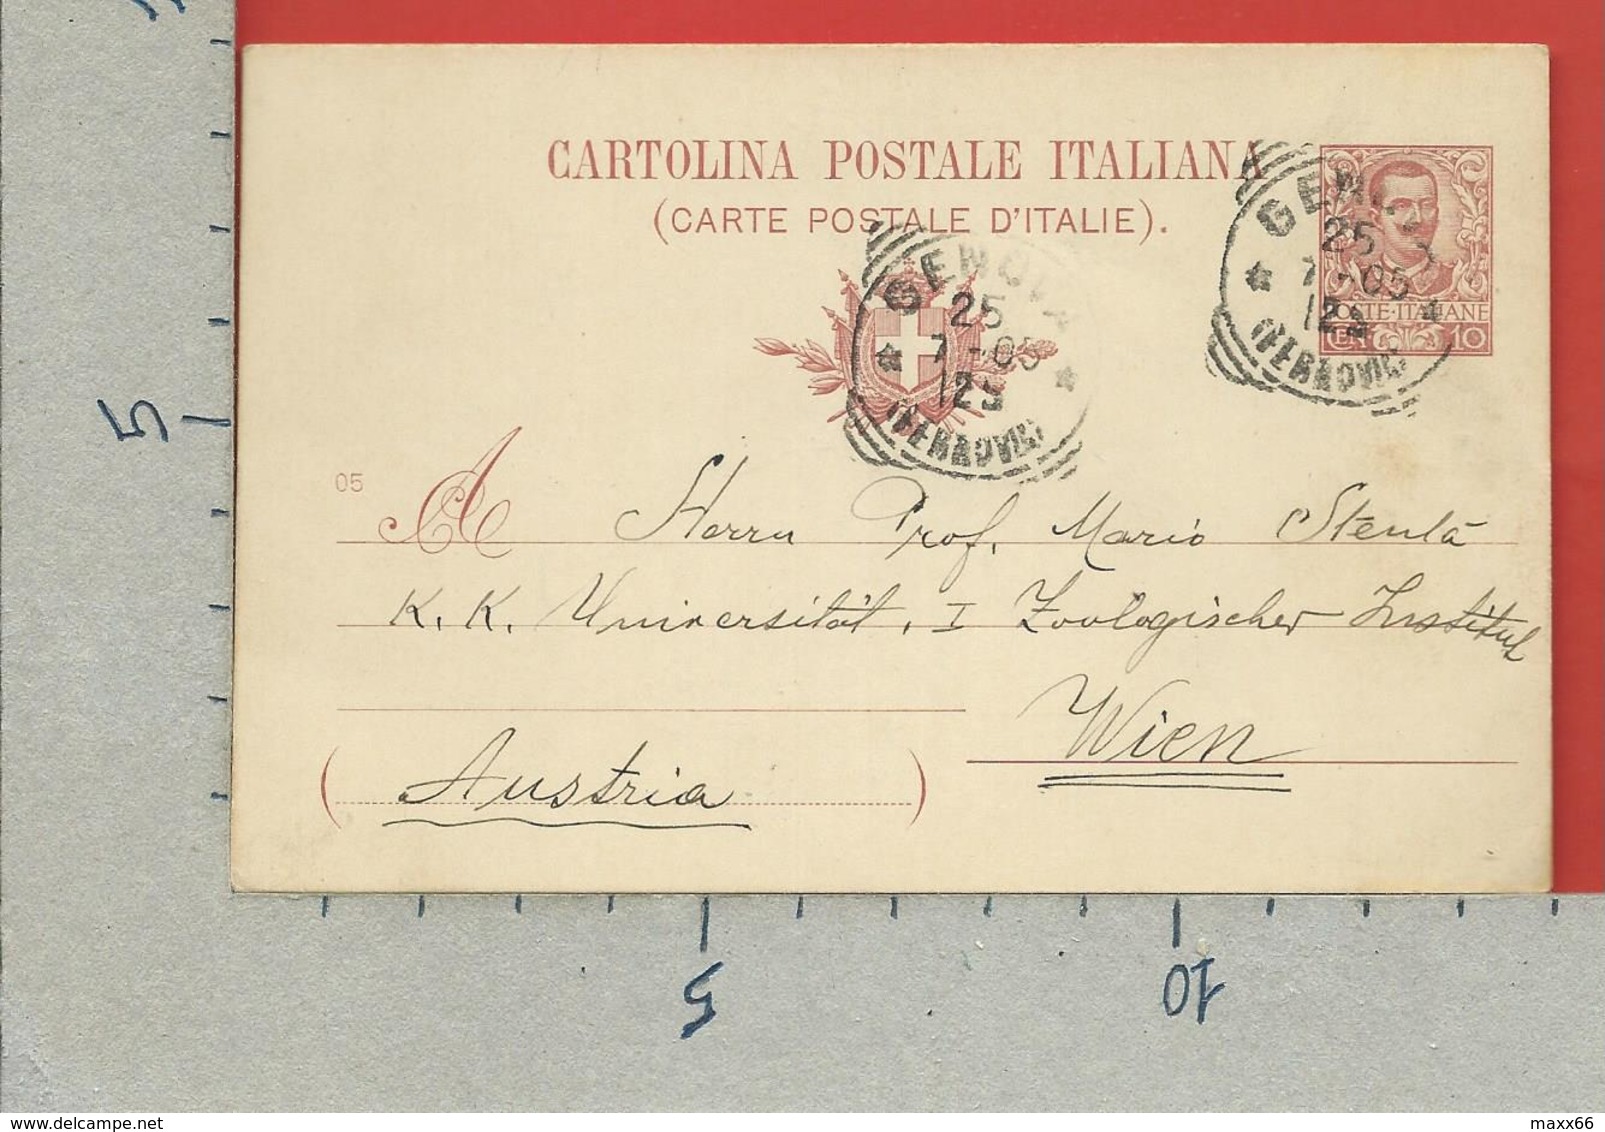 CARTOLINA POSTALE VG ITALIA - Tipo Floreale V. Emanuele III - MARIO STENTA 1905 - S. CP30 MILL. 05 - AUSTRIA - Entero Postal